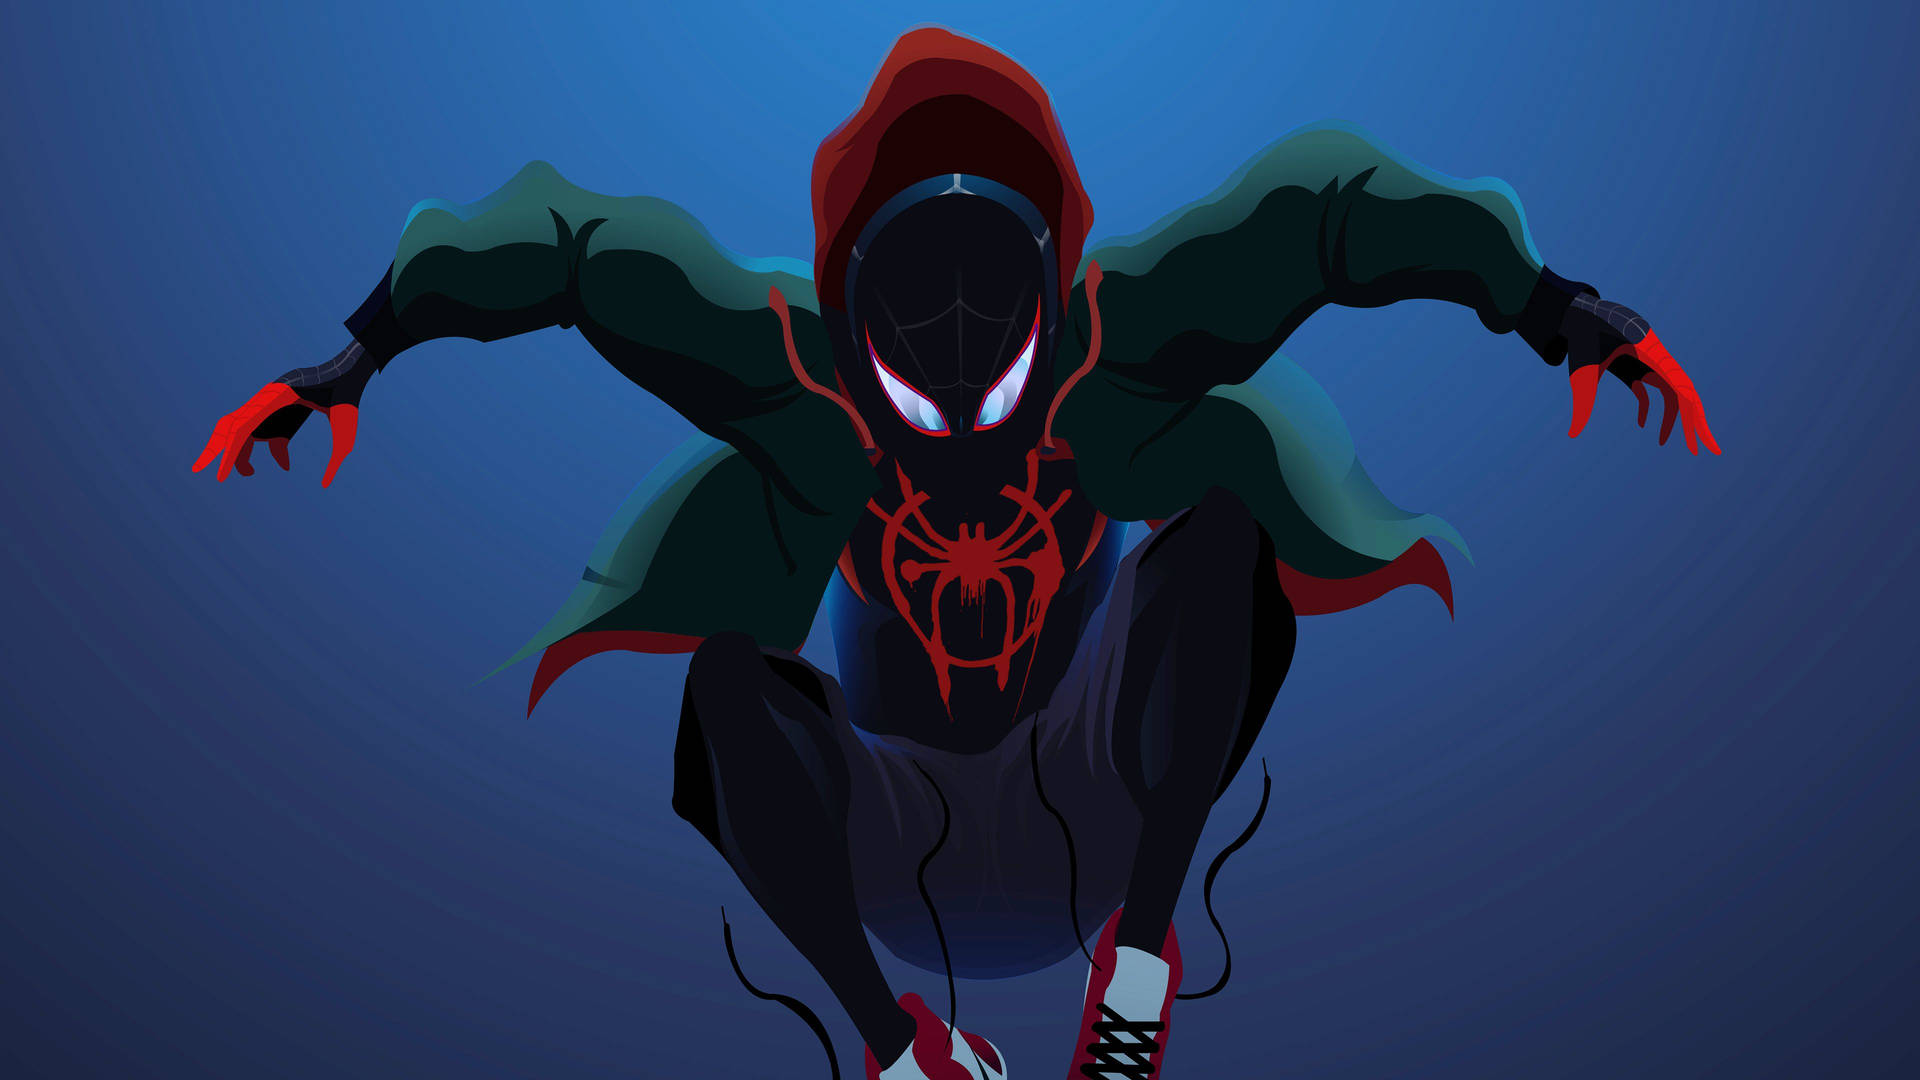 Spiderman Jumping Digital Art Background